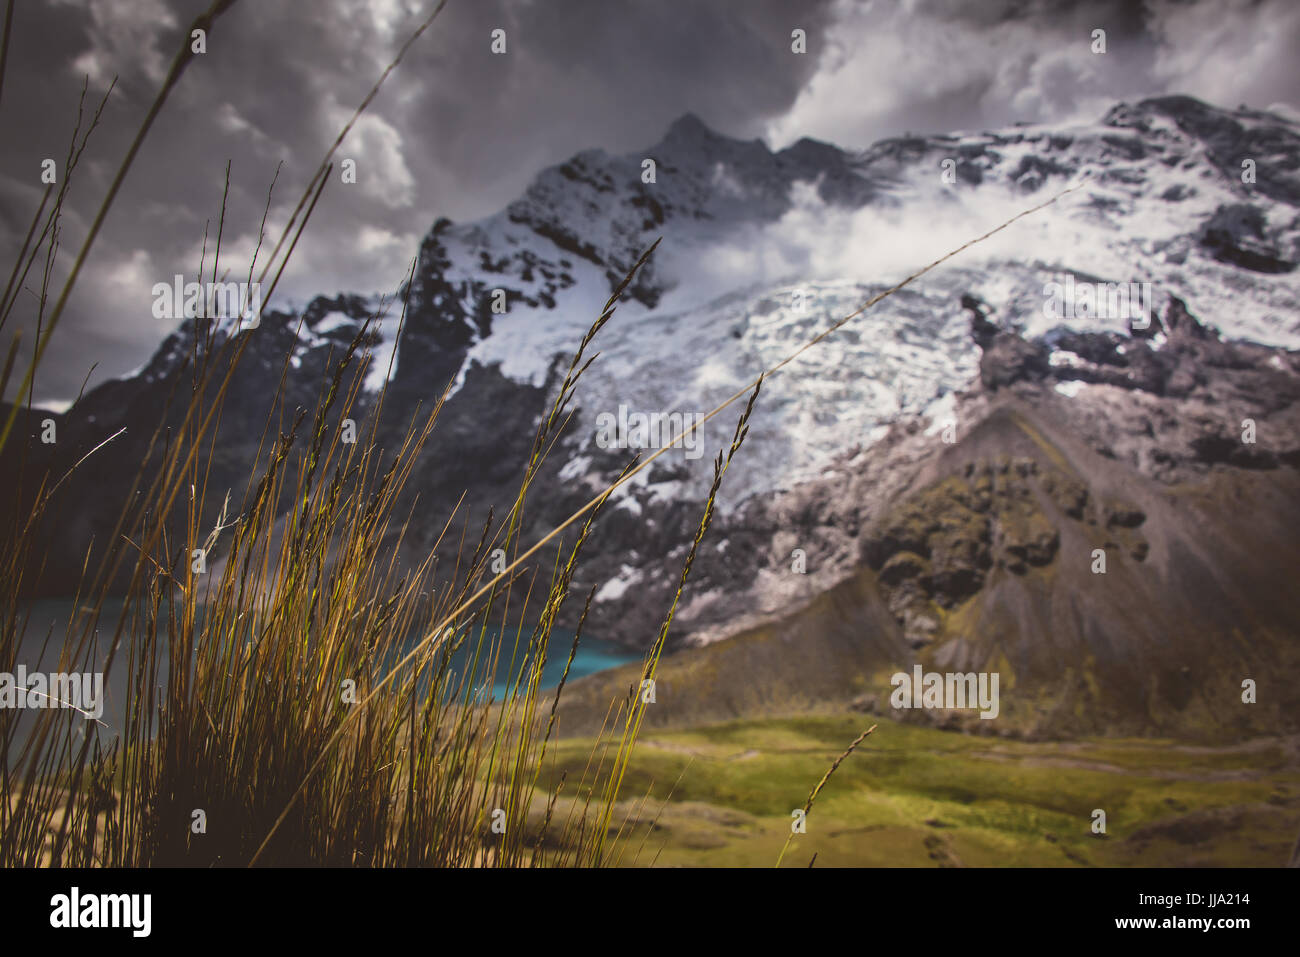 Ausangate glazialen Bergkette & Seen, Peru Stockfoto